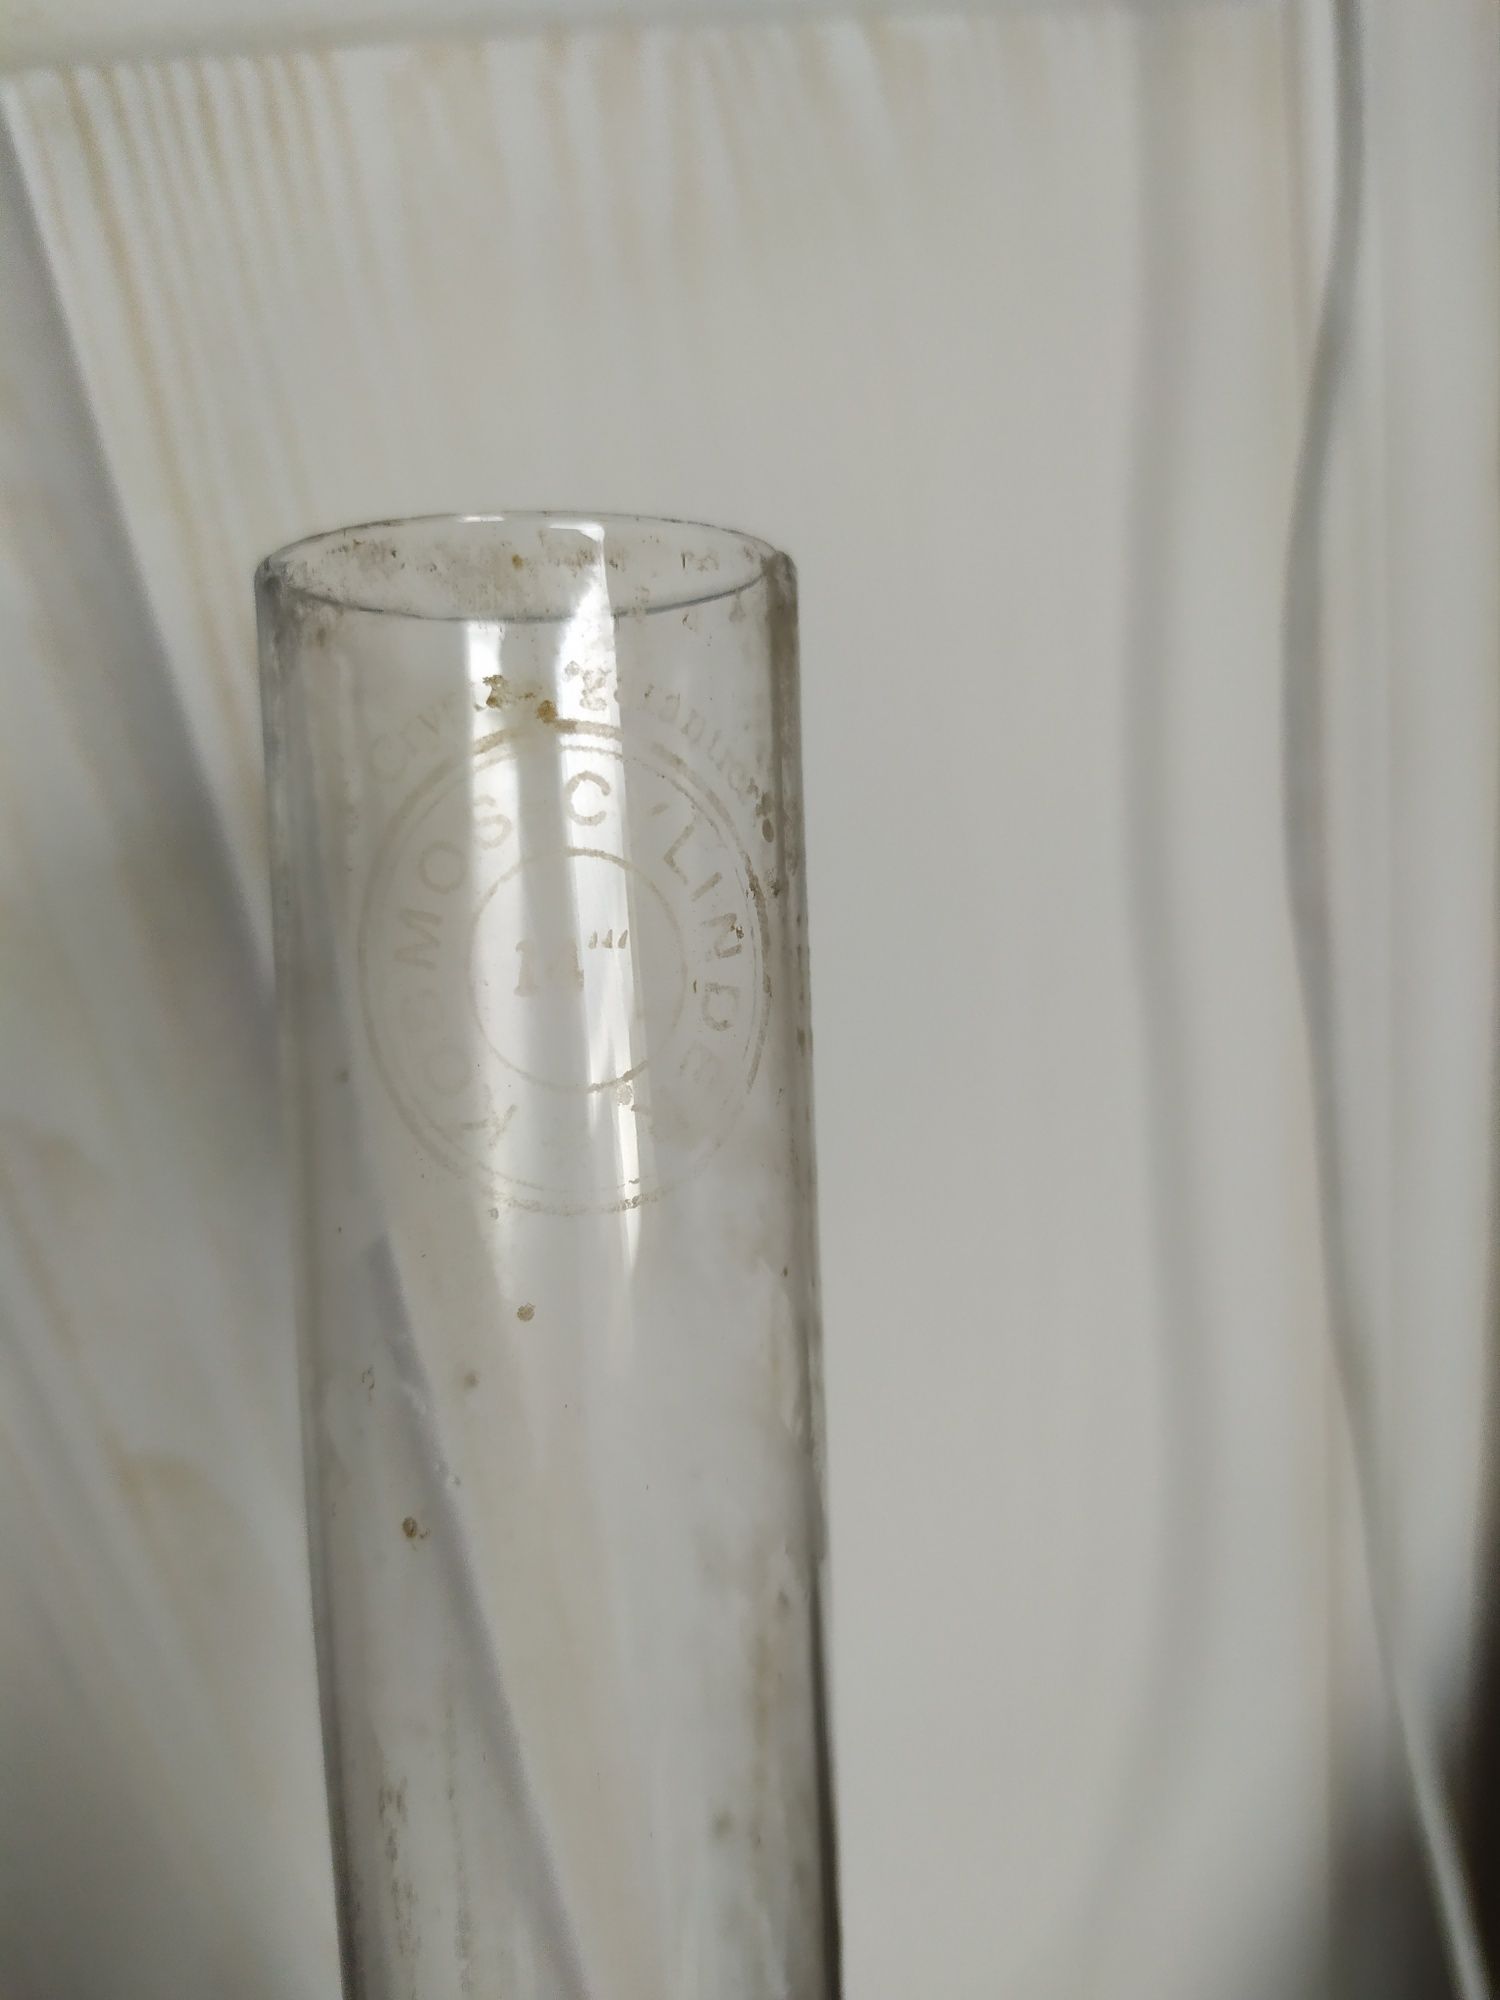 Lampa naftowa porcelana sygnowana Stylowe starocia